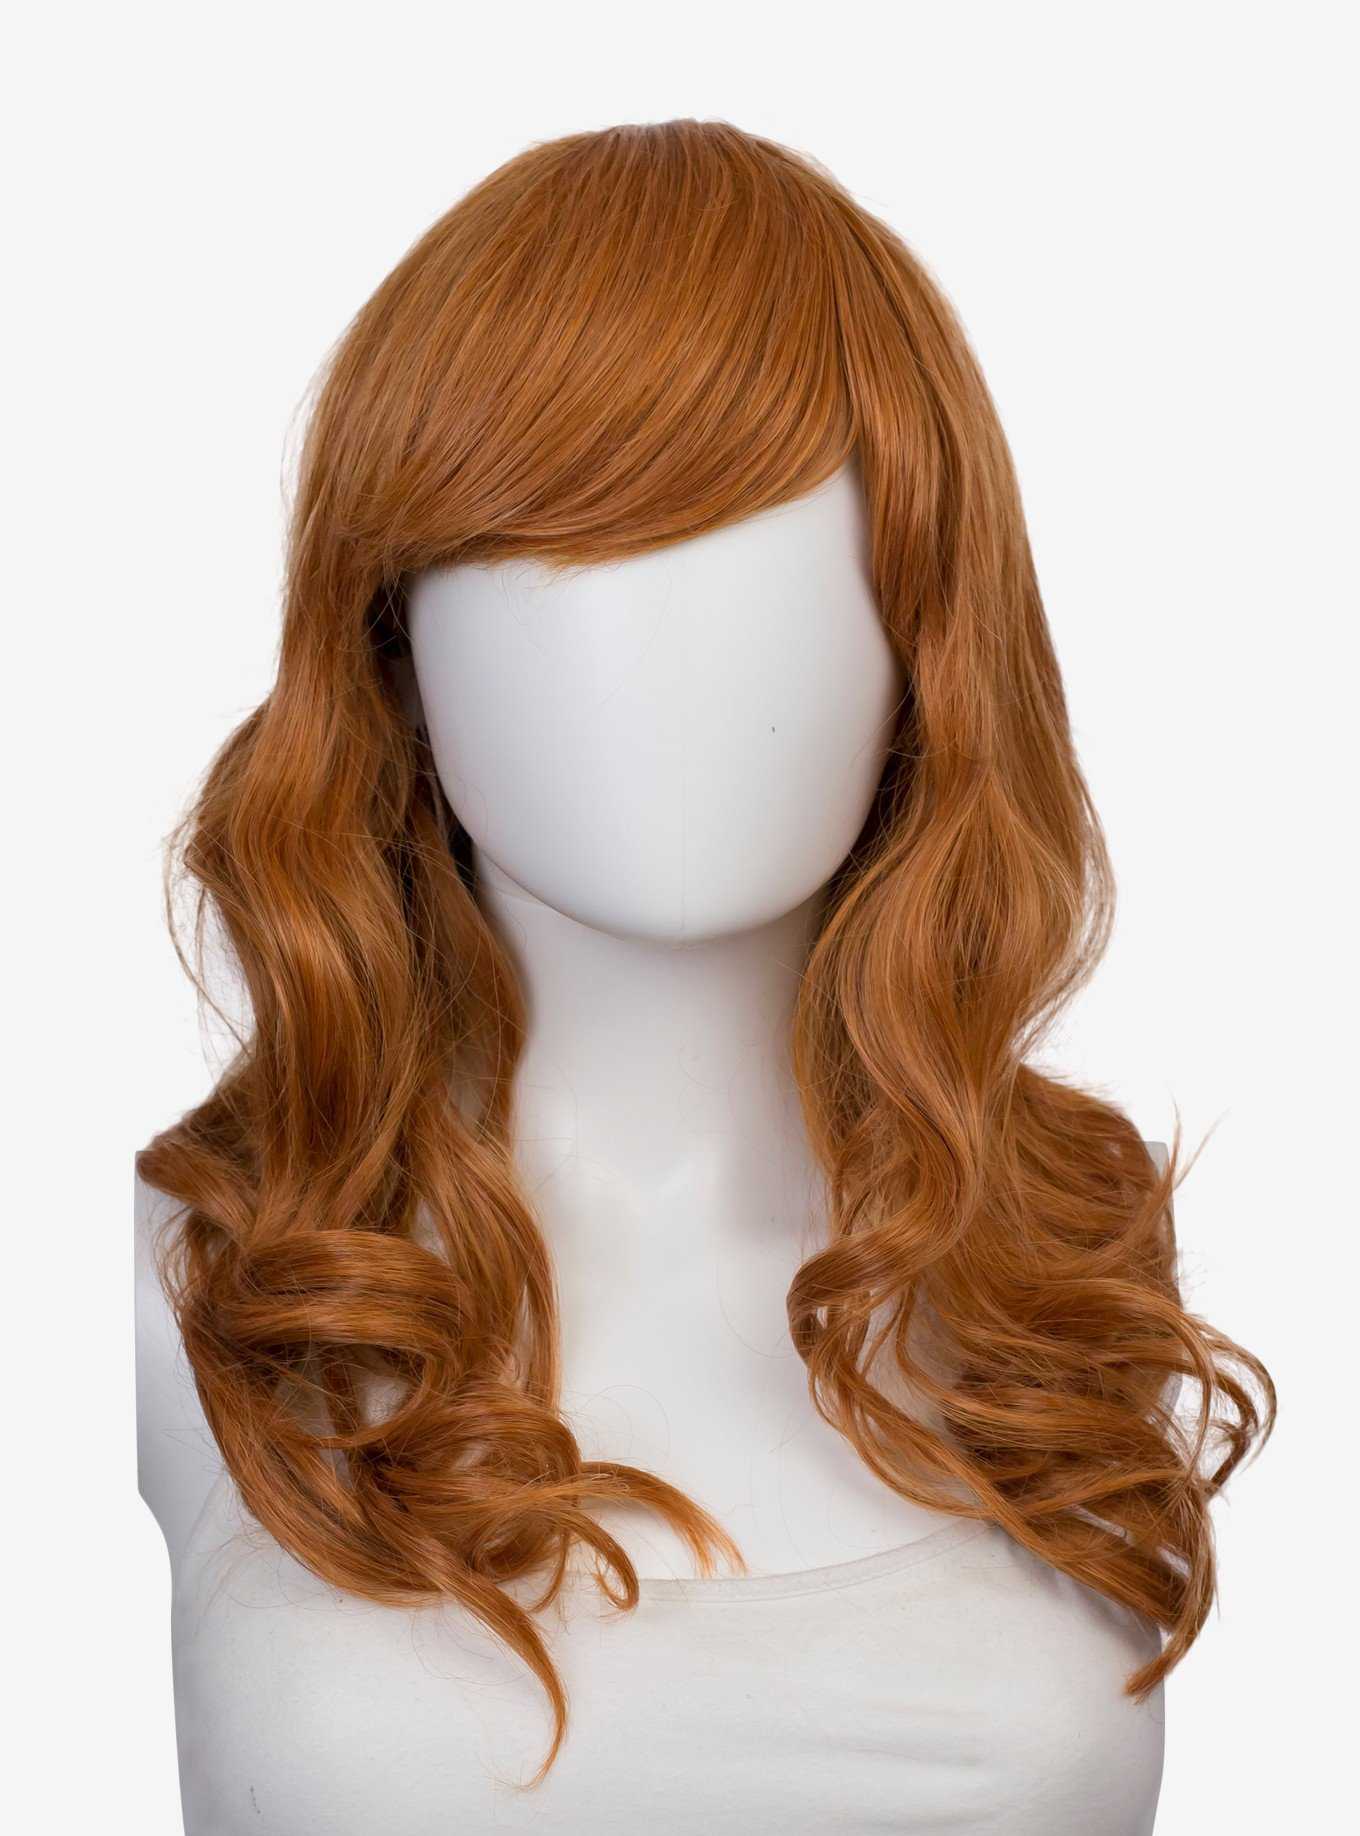 Epic Cosplay Hestia Autumn Orange Mix Shoulder Length Curly Wig, , hi-res